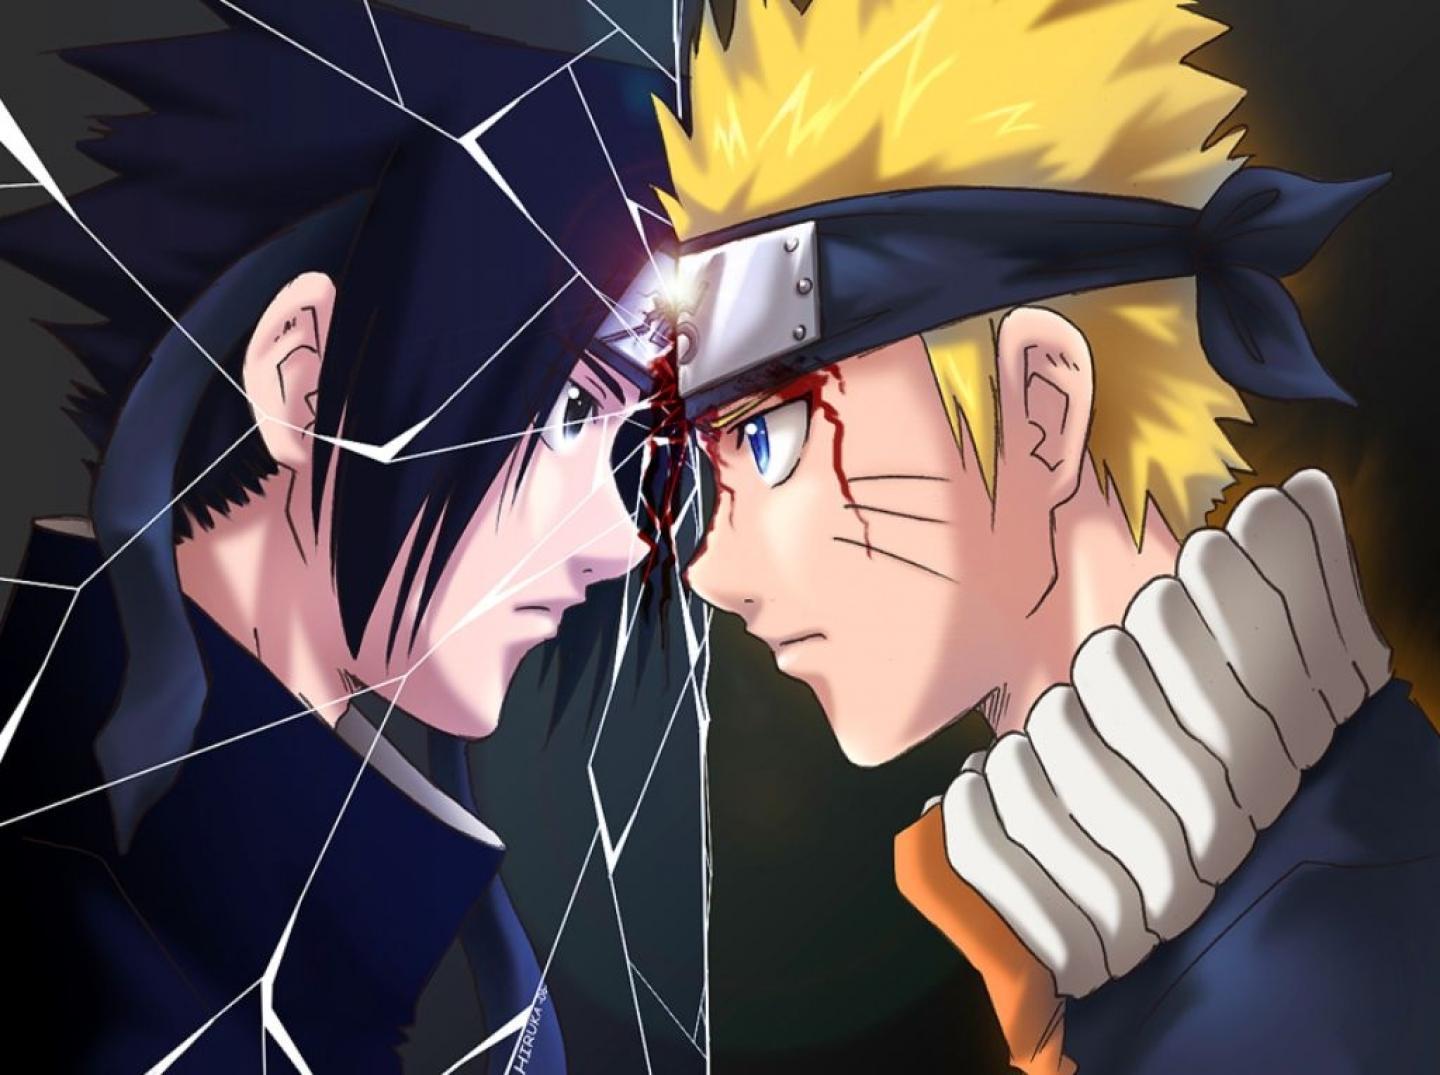 Sasuke vs naruto images Sasuke vs Naruto HD wallpaper and background